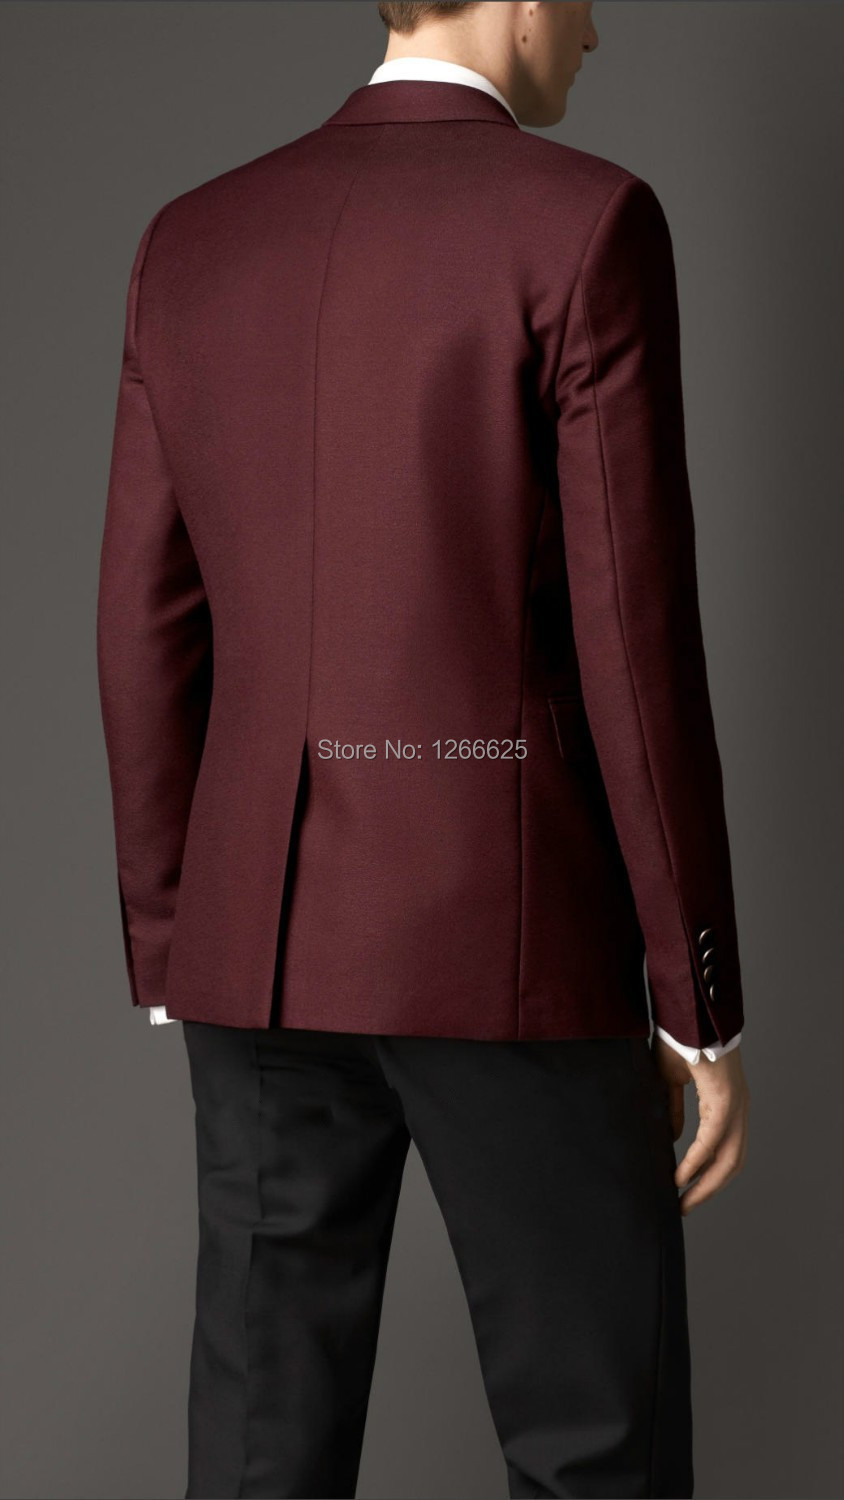 Aliexpress.com : Buy 2015 Fashion Men Dark Red Tuxedo Black Peak